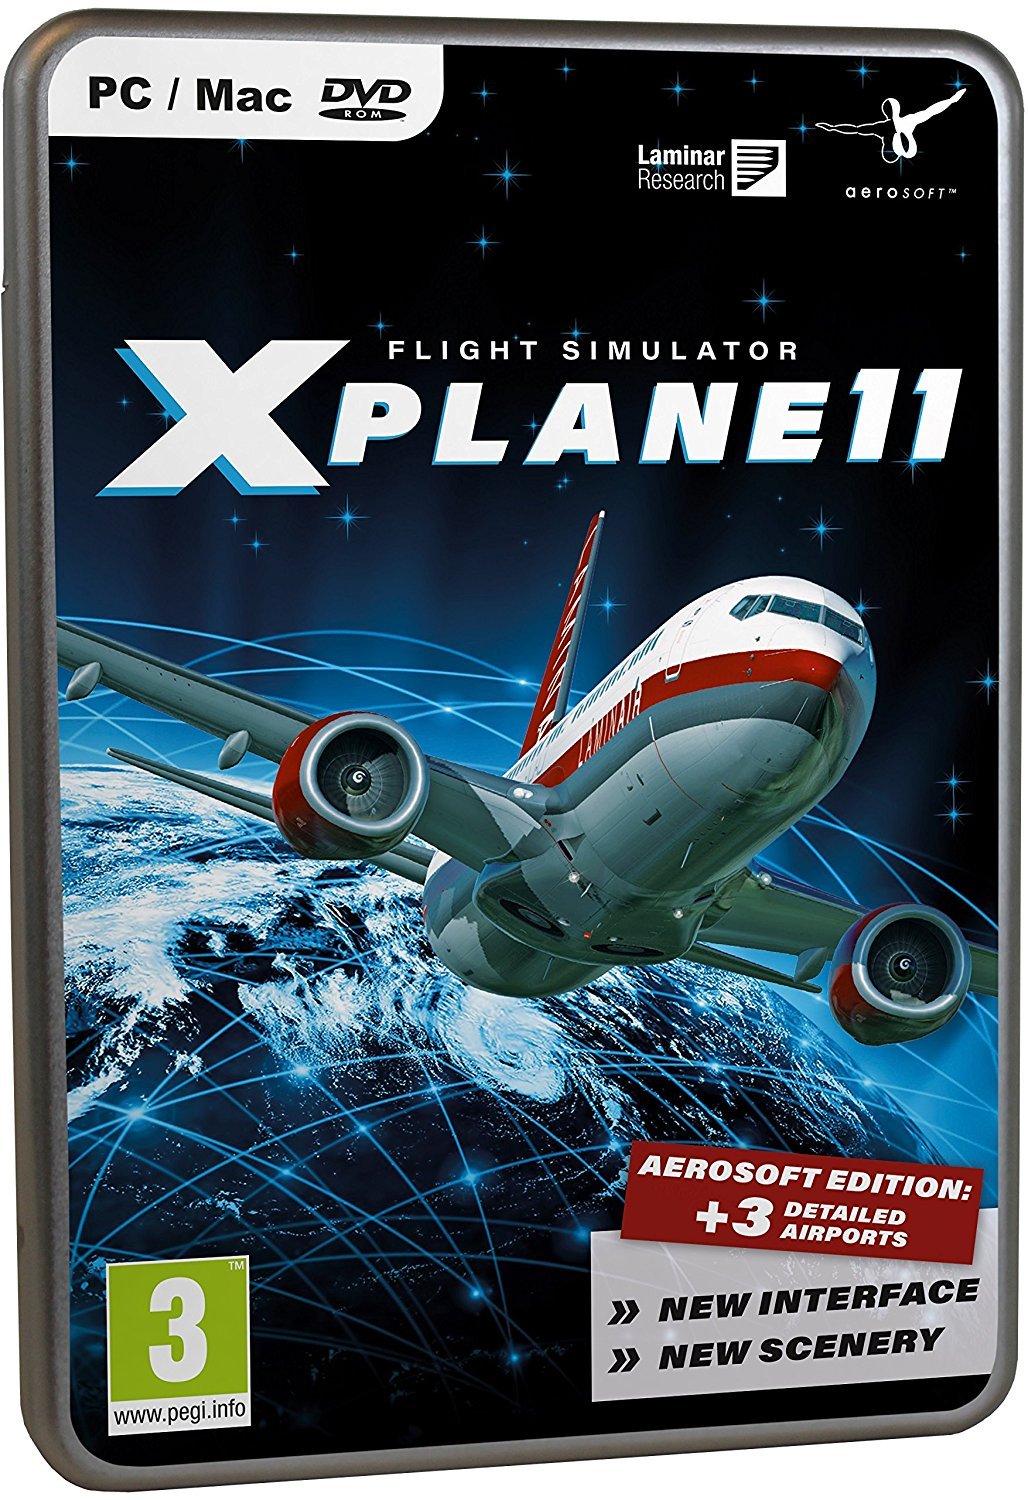 x plane 11 vs microsoft flight simulator 2020